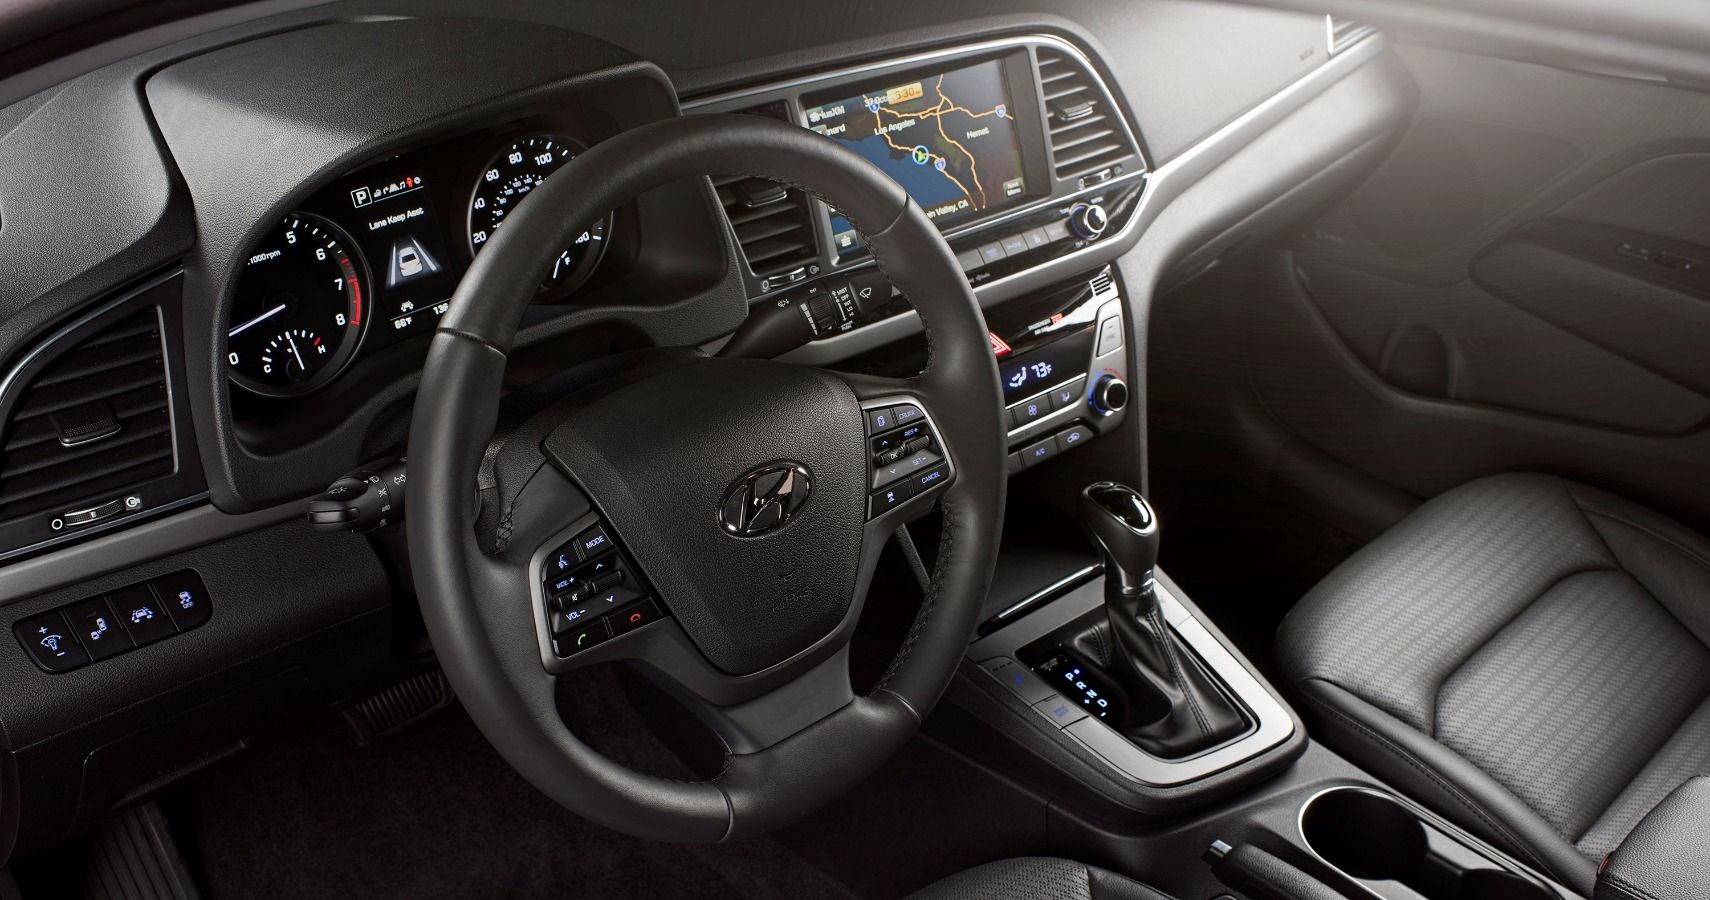 A peek inside the 2018 Hyundai Elantra's interior.